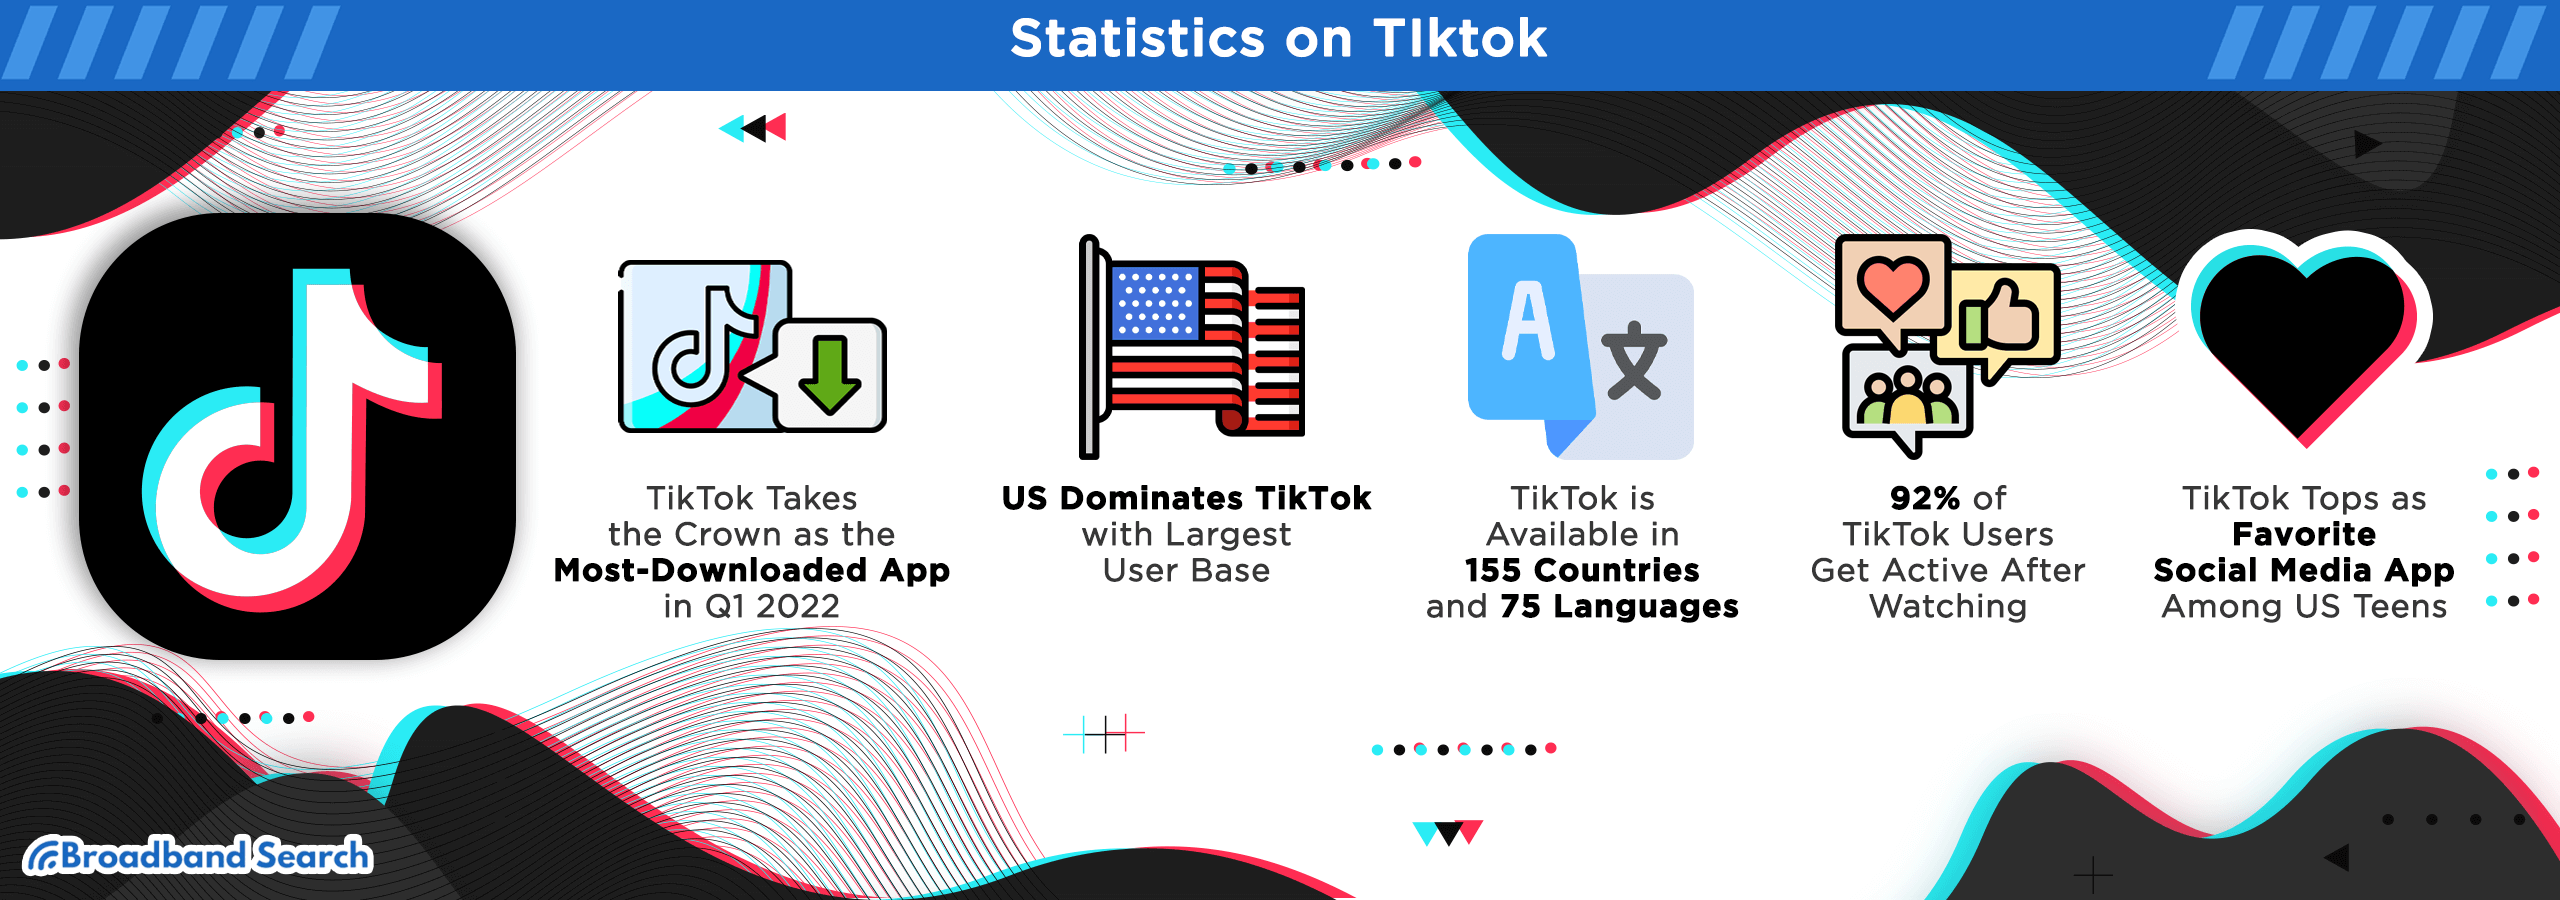 five statistics about Tiktok